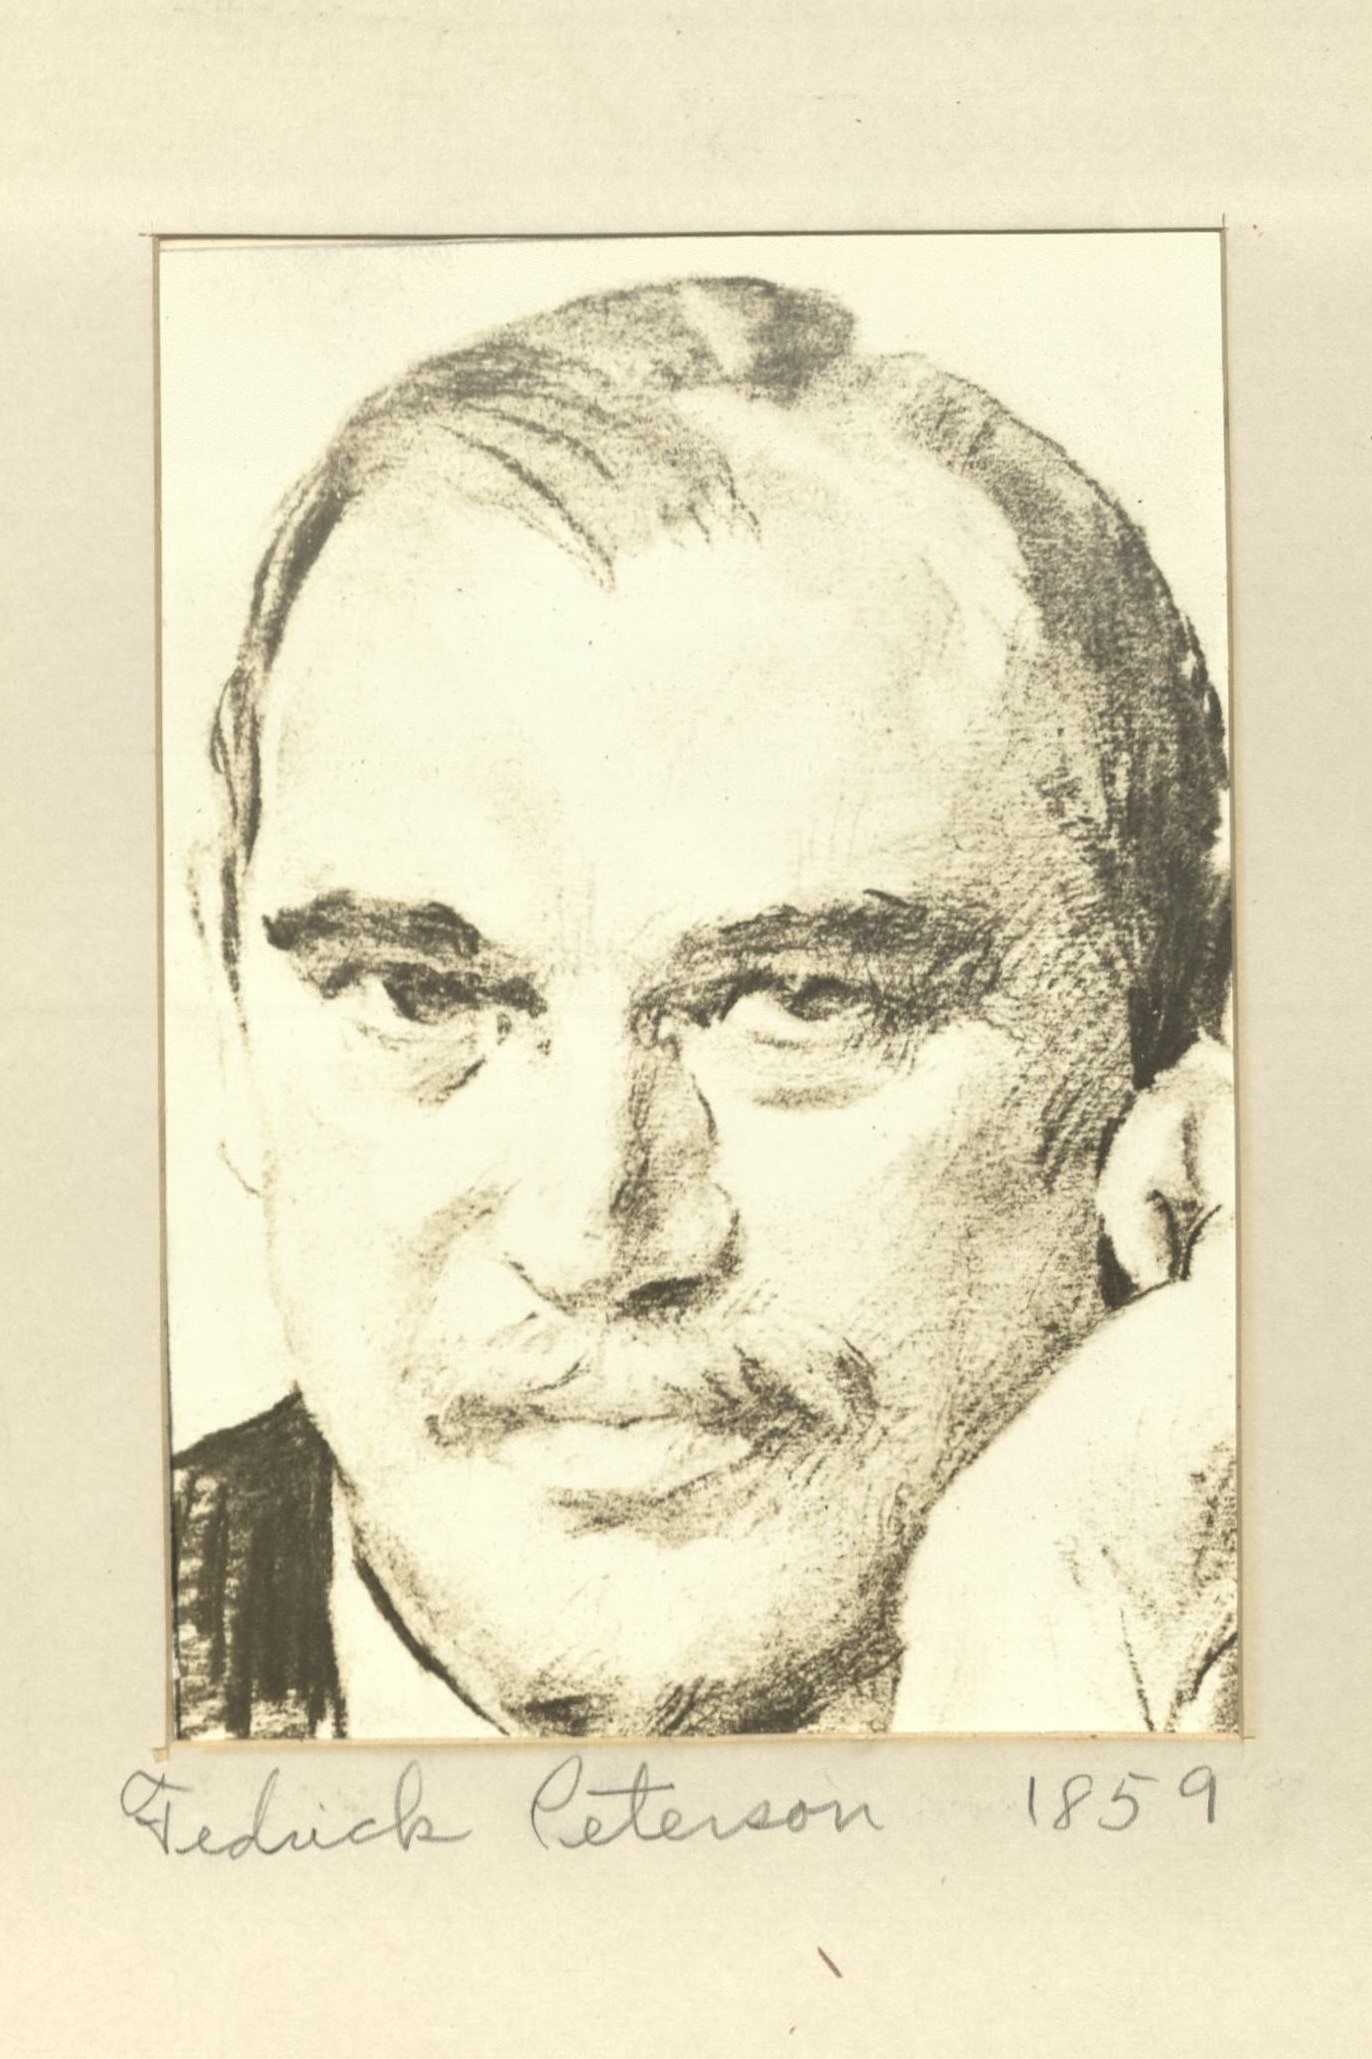 Member portrait of Frederick Peterson